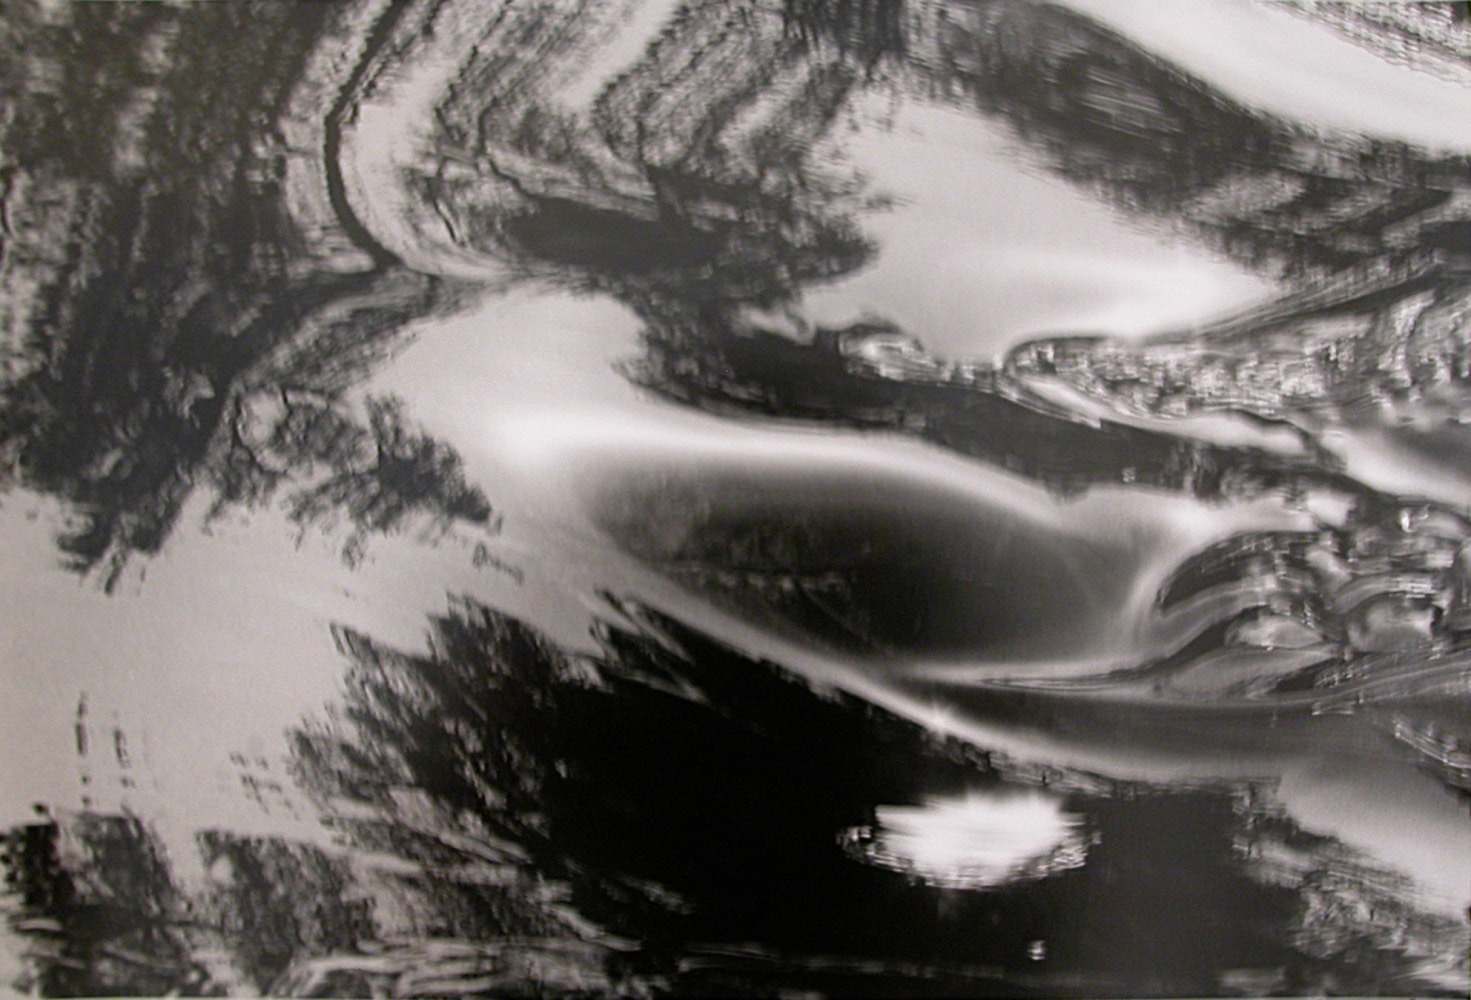 Riviere Love, Ornans (Courbet), 1979
silver gelatin print
13 7/8 x 19 inches
35.2 x 48.3 cm
LSFA# 11060